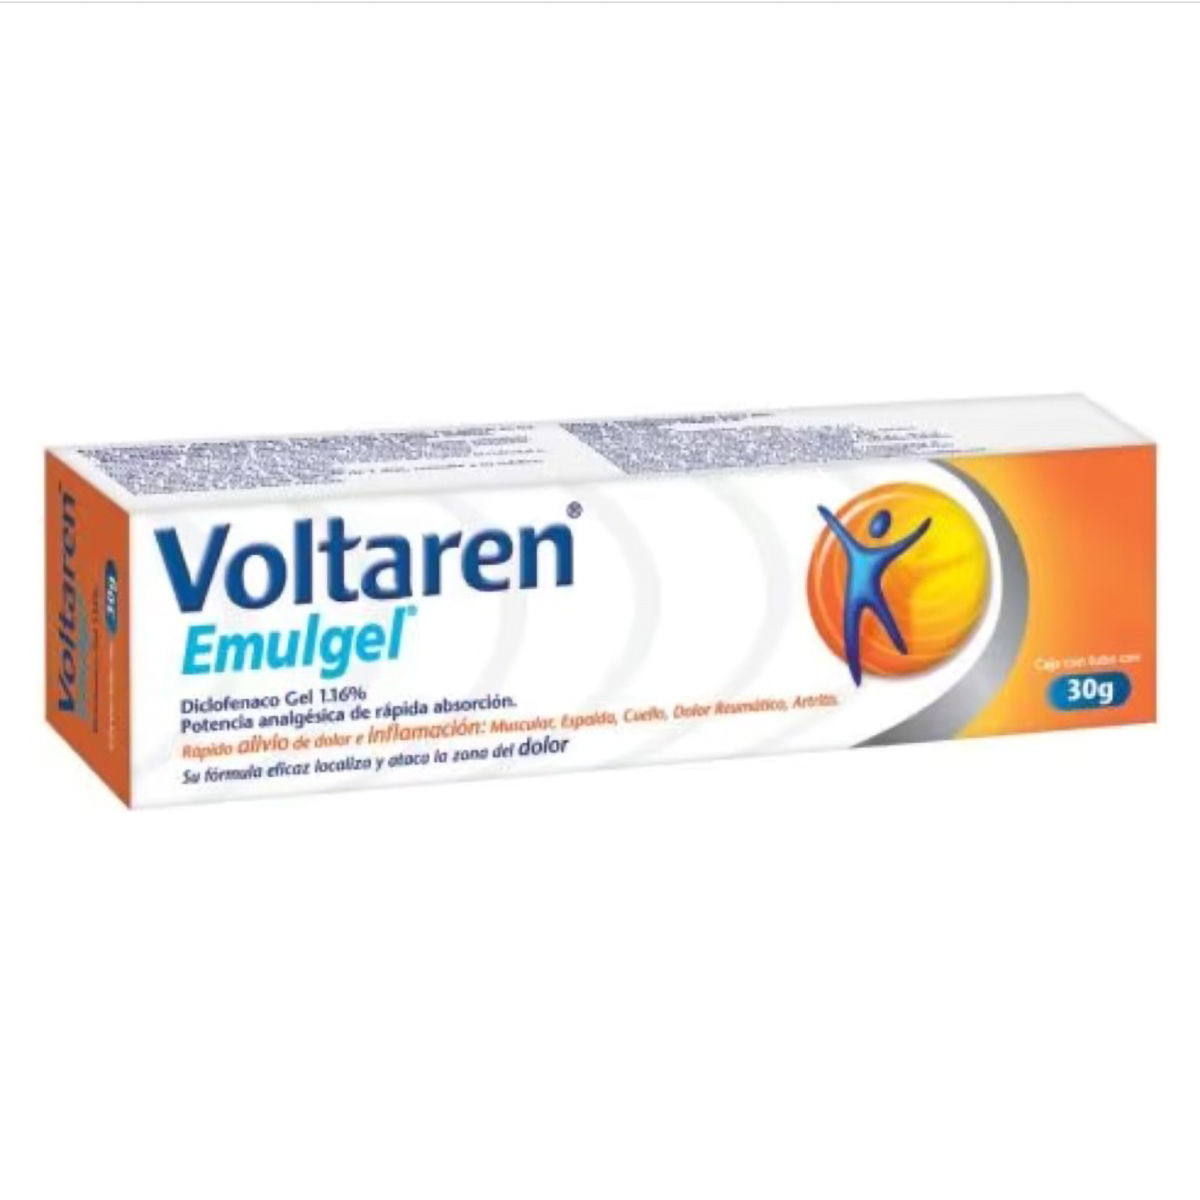 Voltaren Emulgel, 30 gm | Uses, Side Effects, Price | Apollo Pharmacy